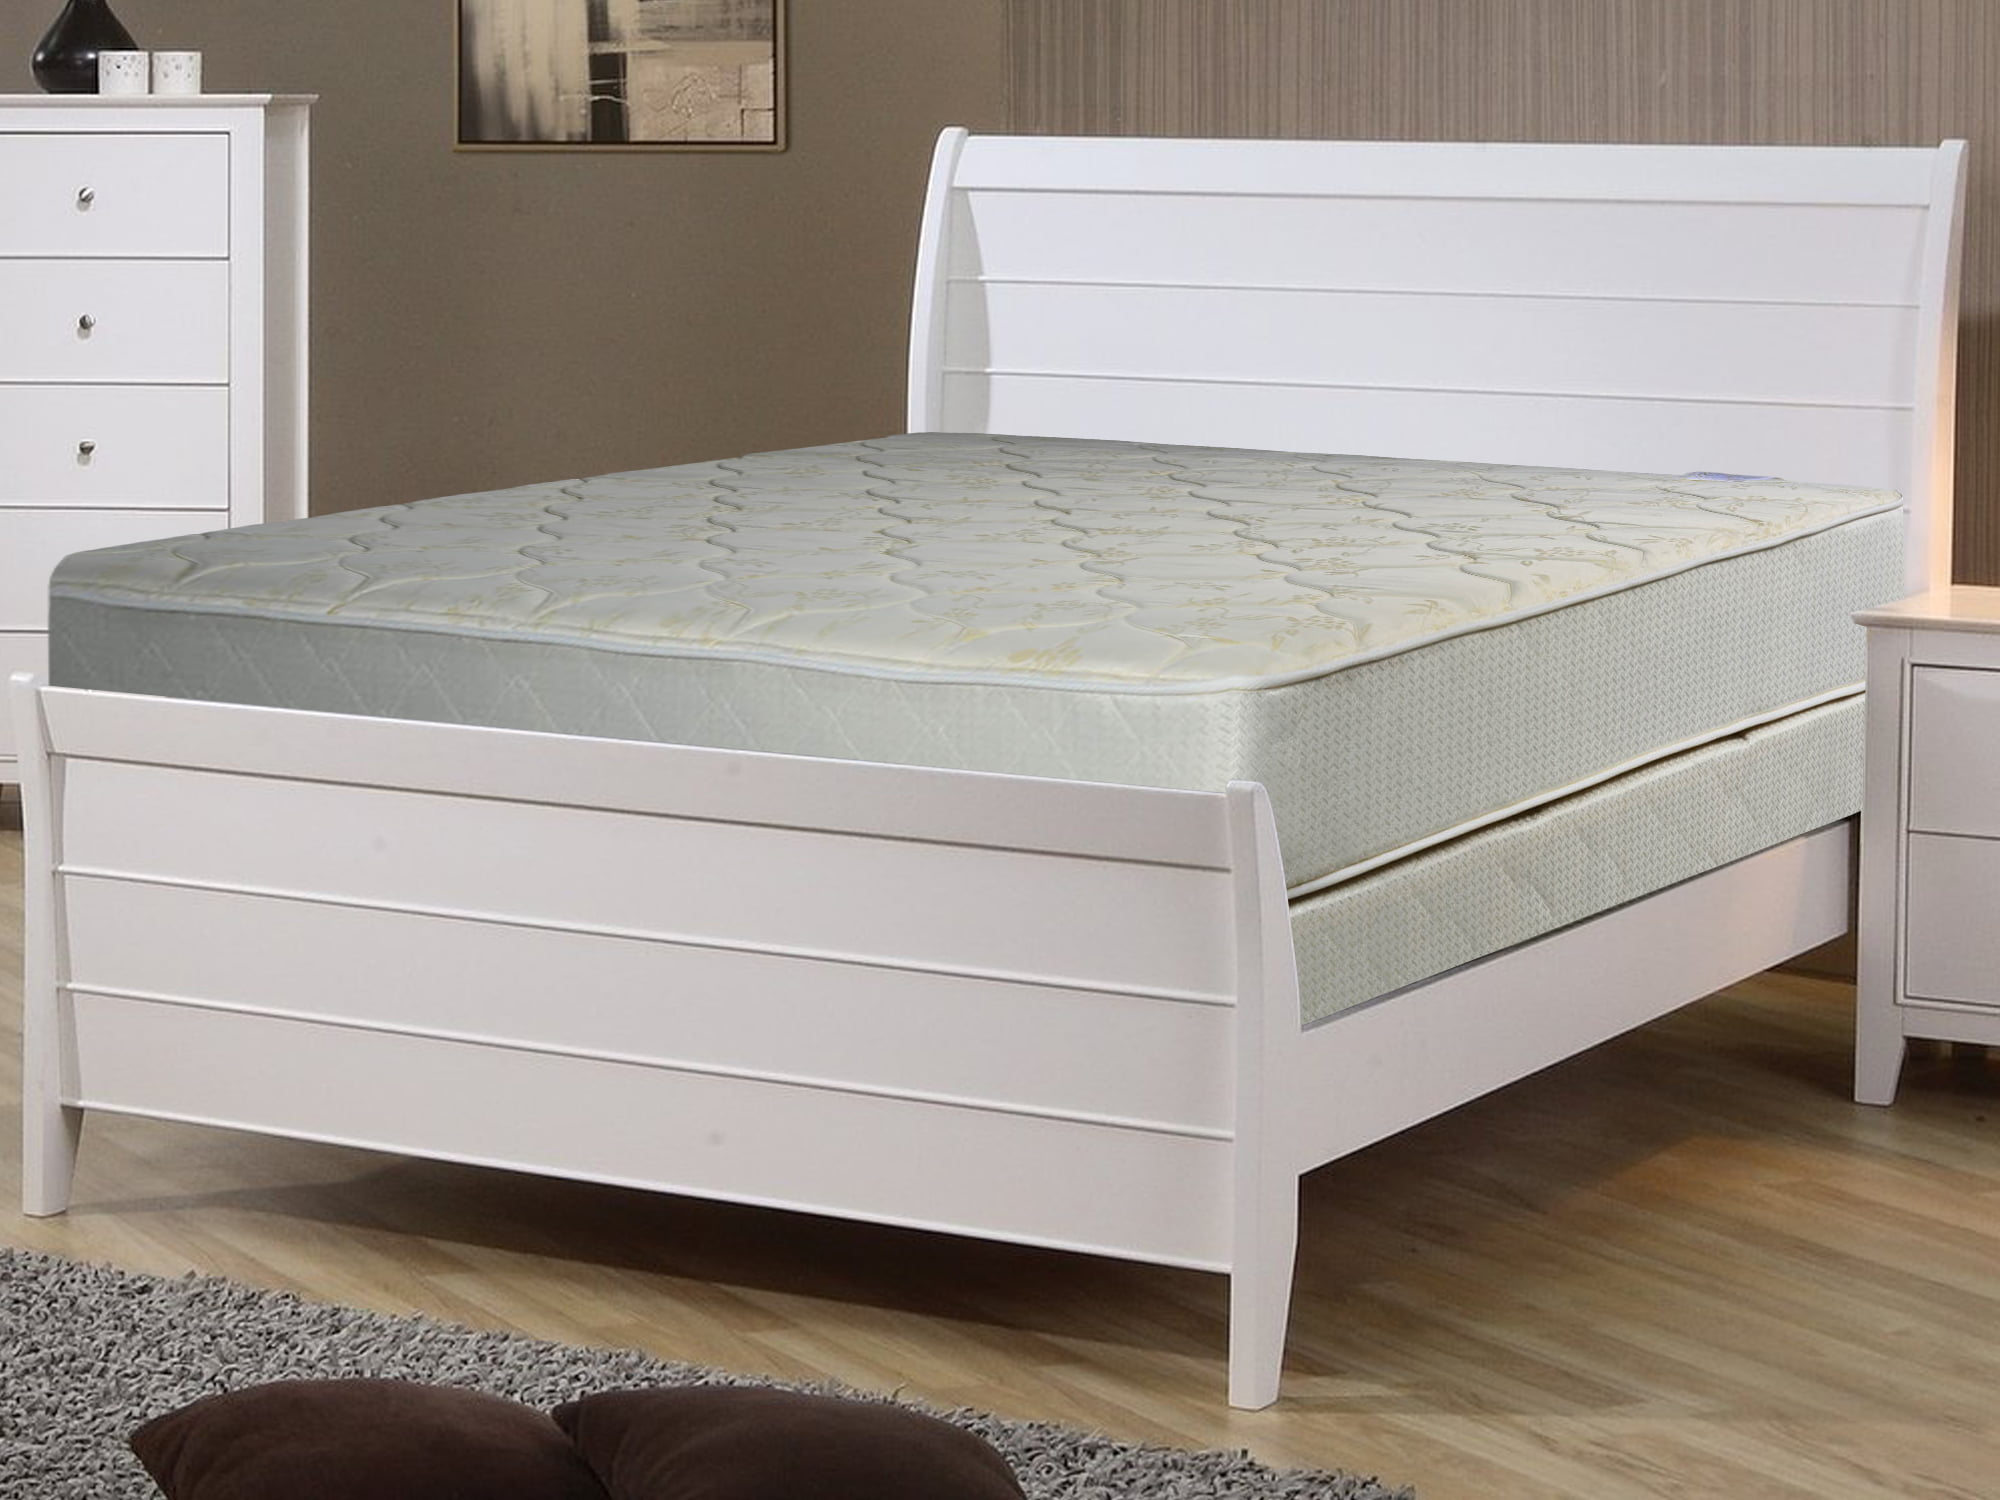 granrest mattress 9 inch